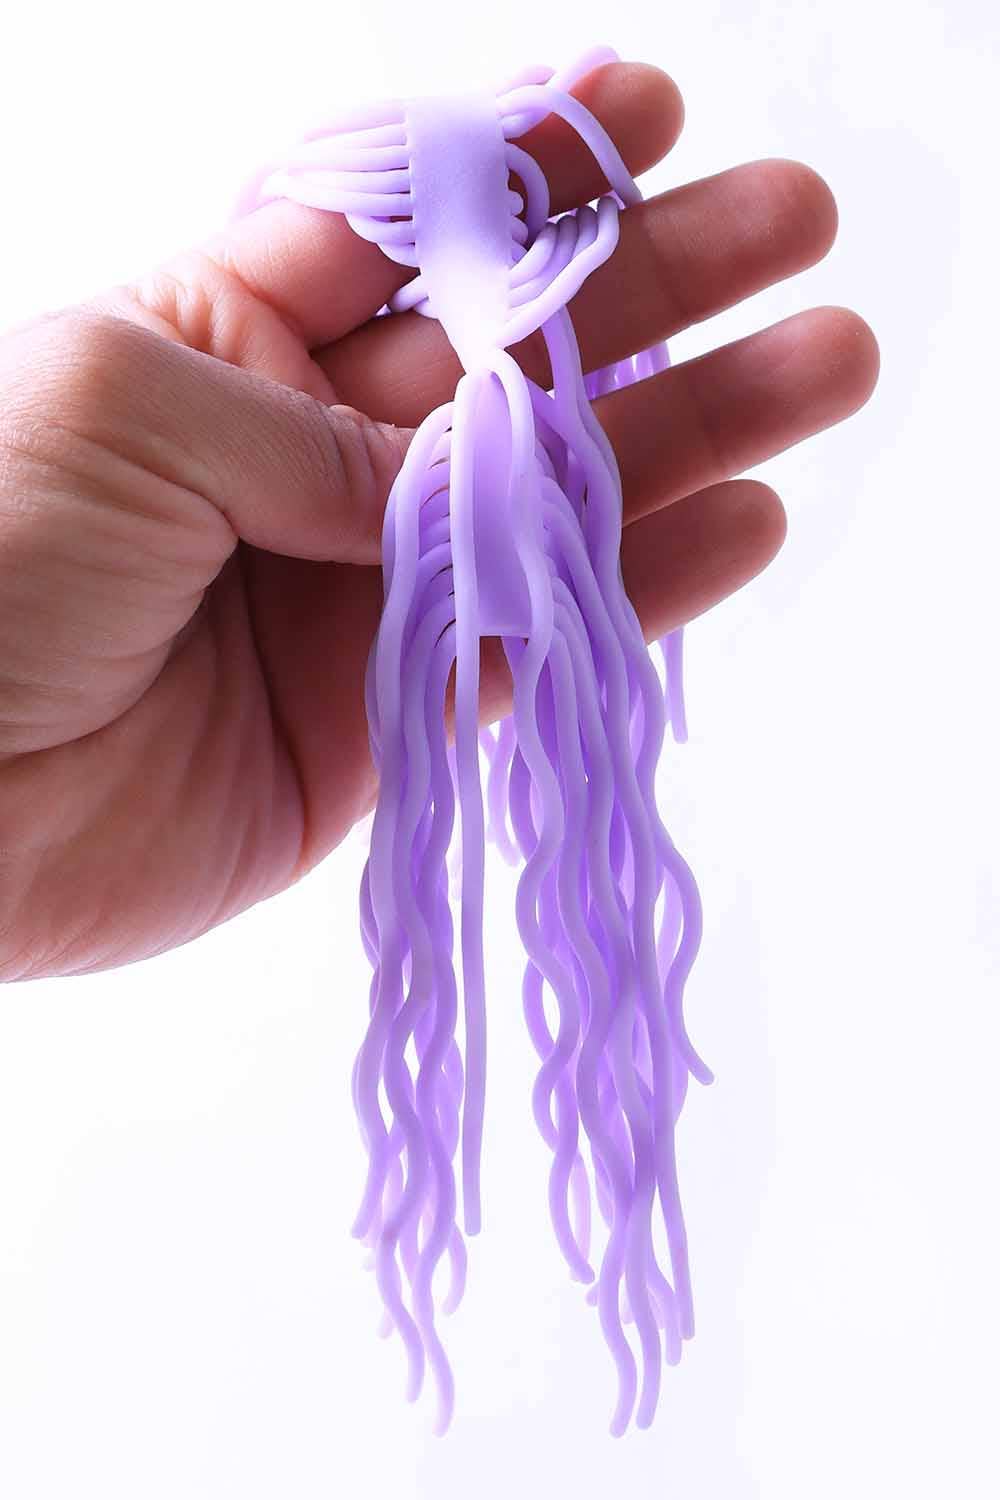 Stretchy String Fidget Toy